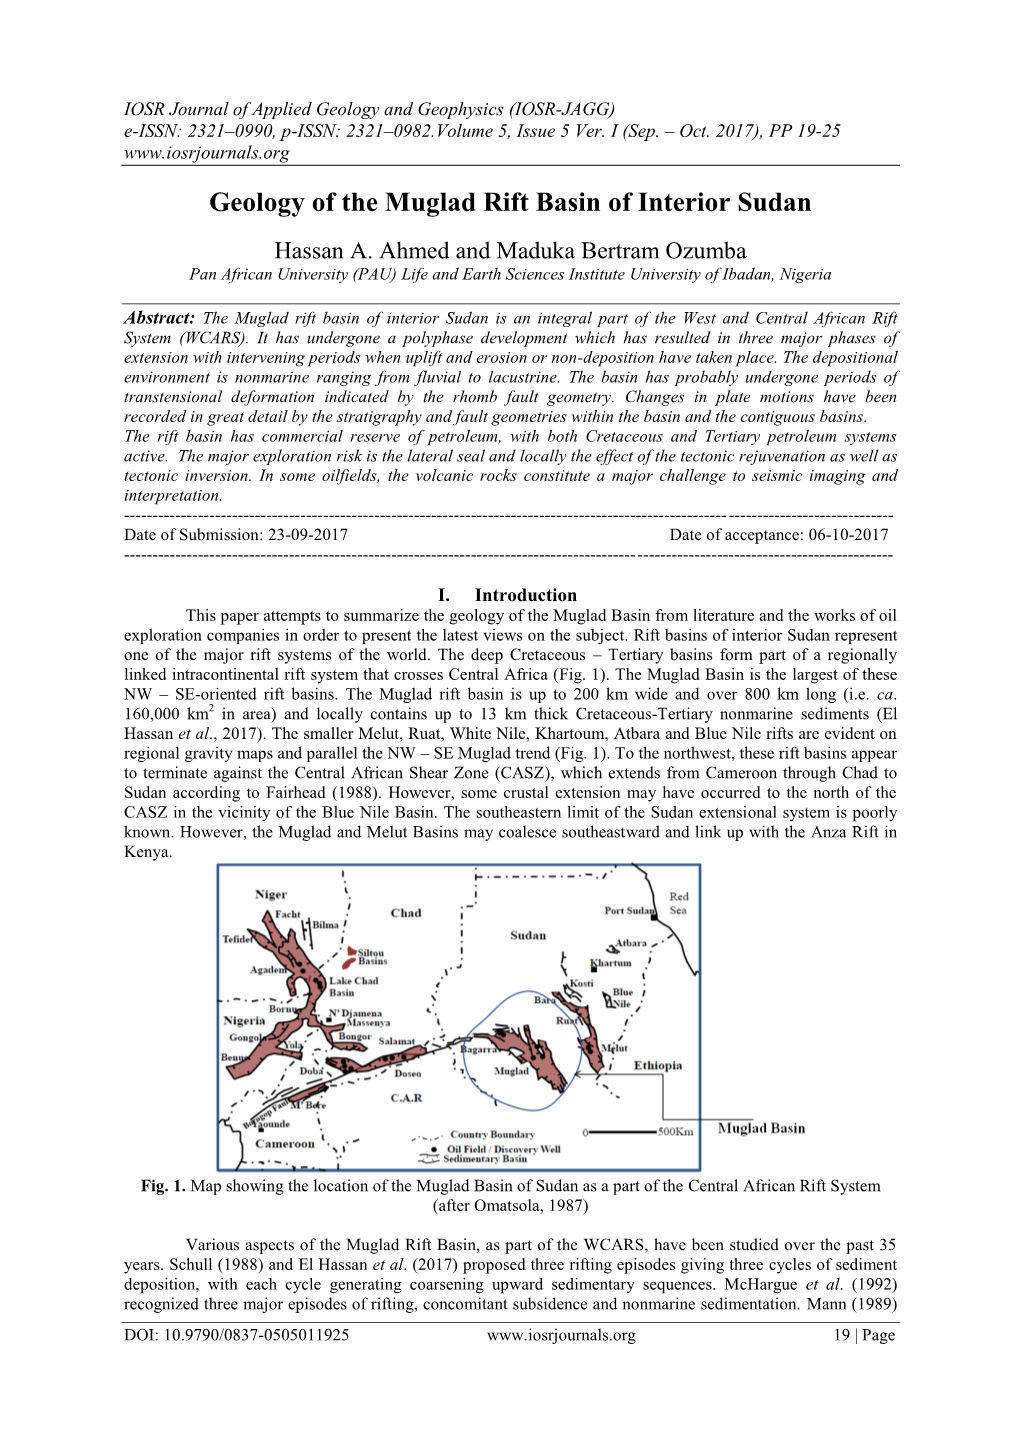 Geology of the Muglad Rift Basin of Interior Sudan